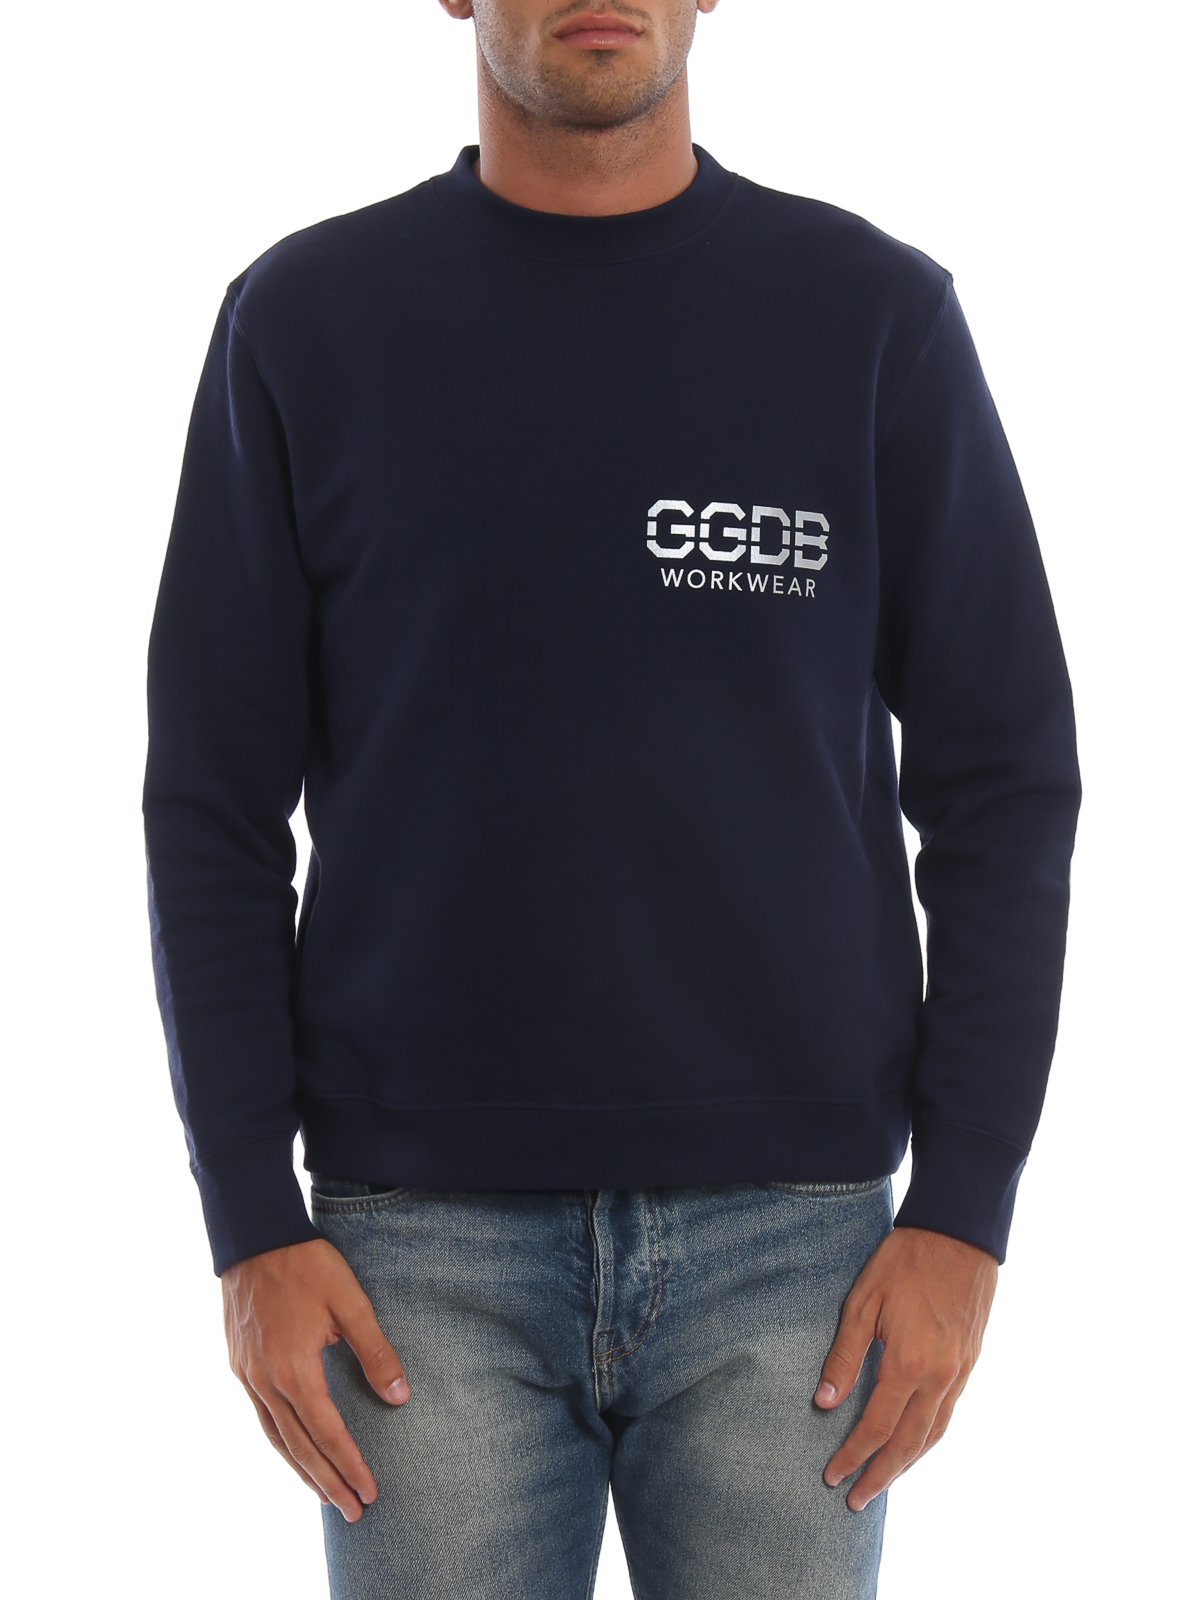 Sweatshirts & Sweaters Golden Goose - GGDB Workwear dark blue cotton ...